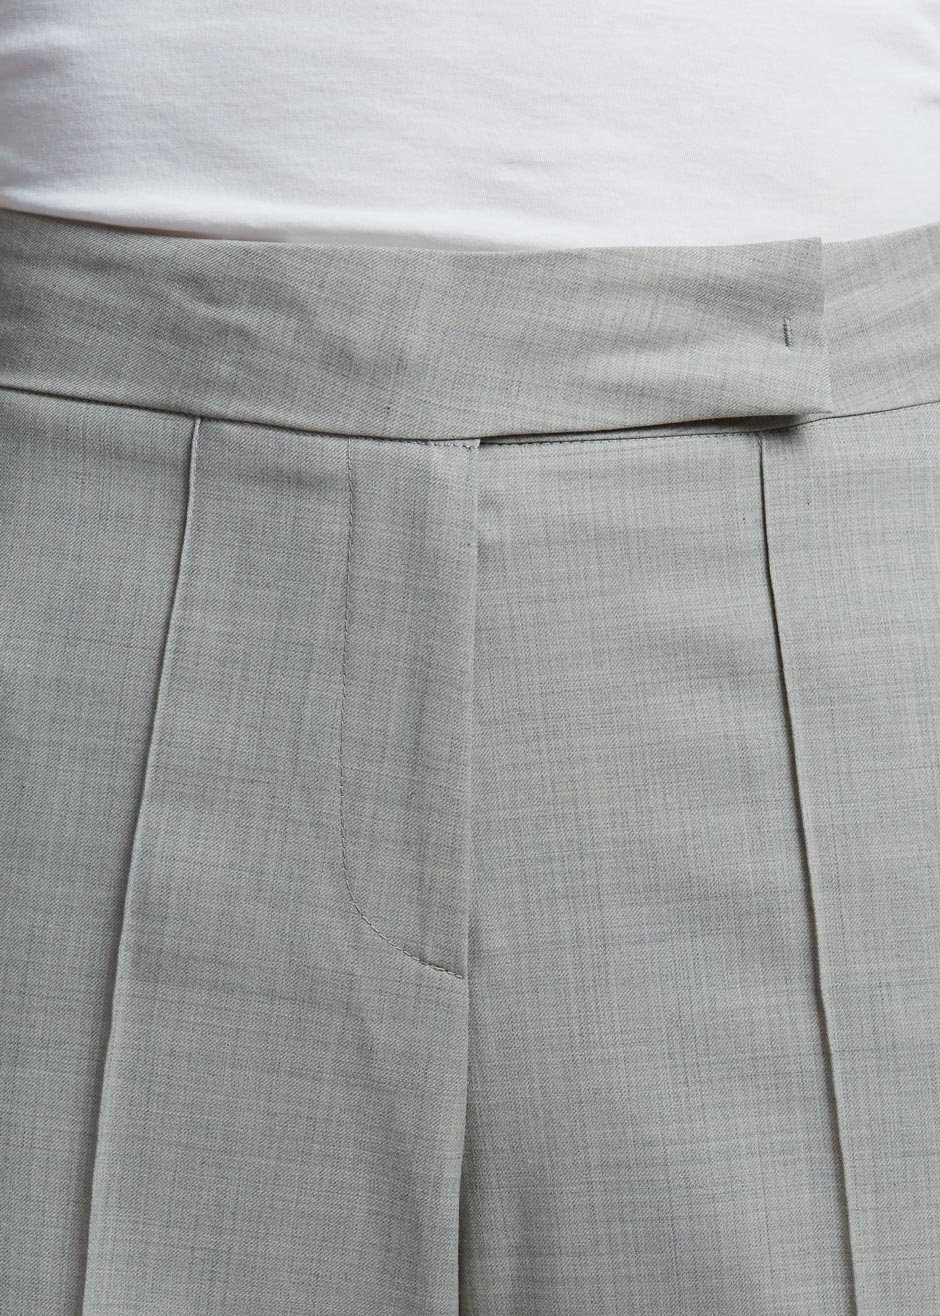 Mattea Suit Trousers in Agate Melange - 8